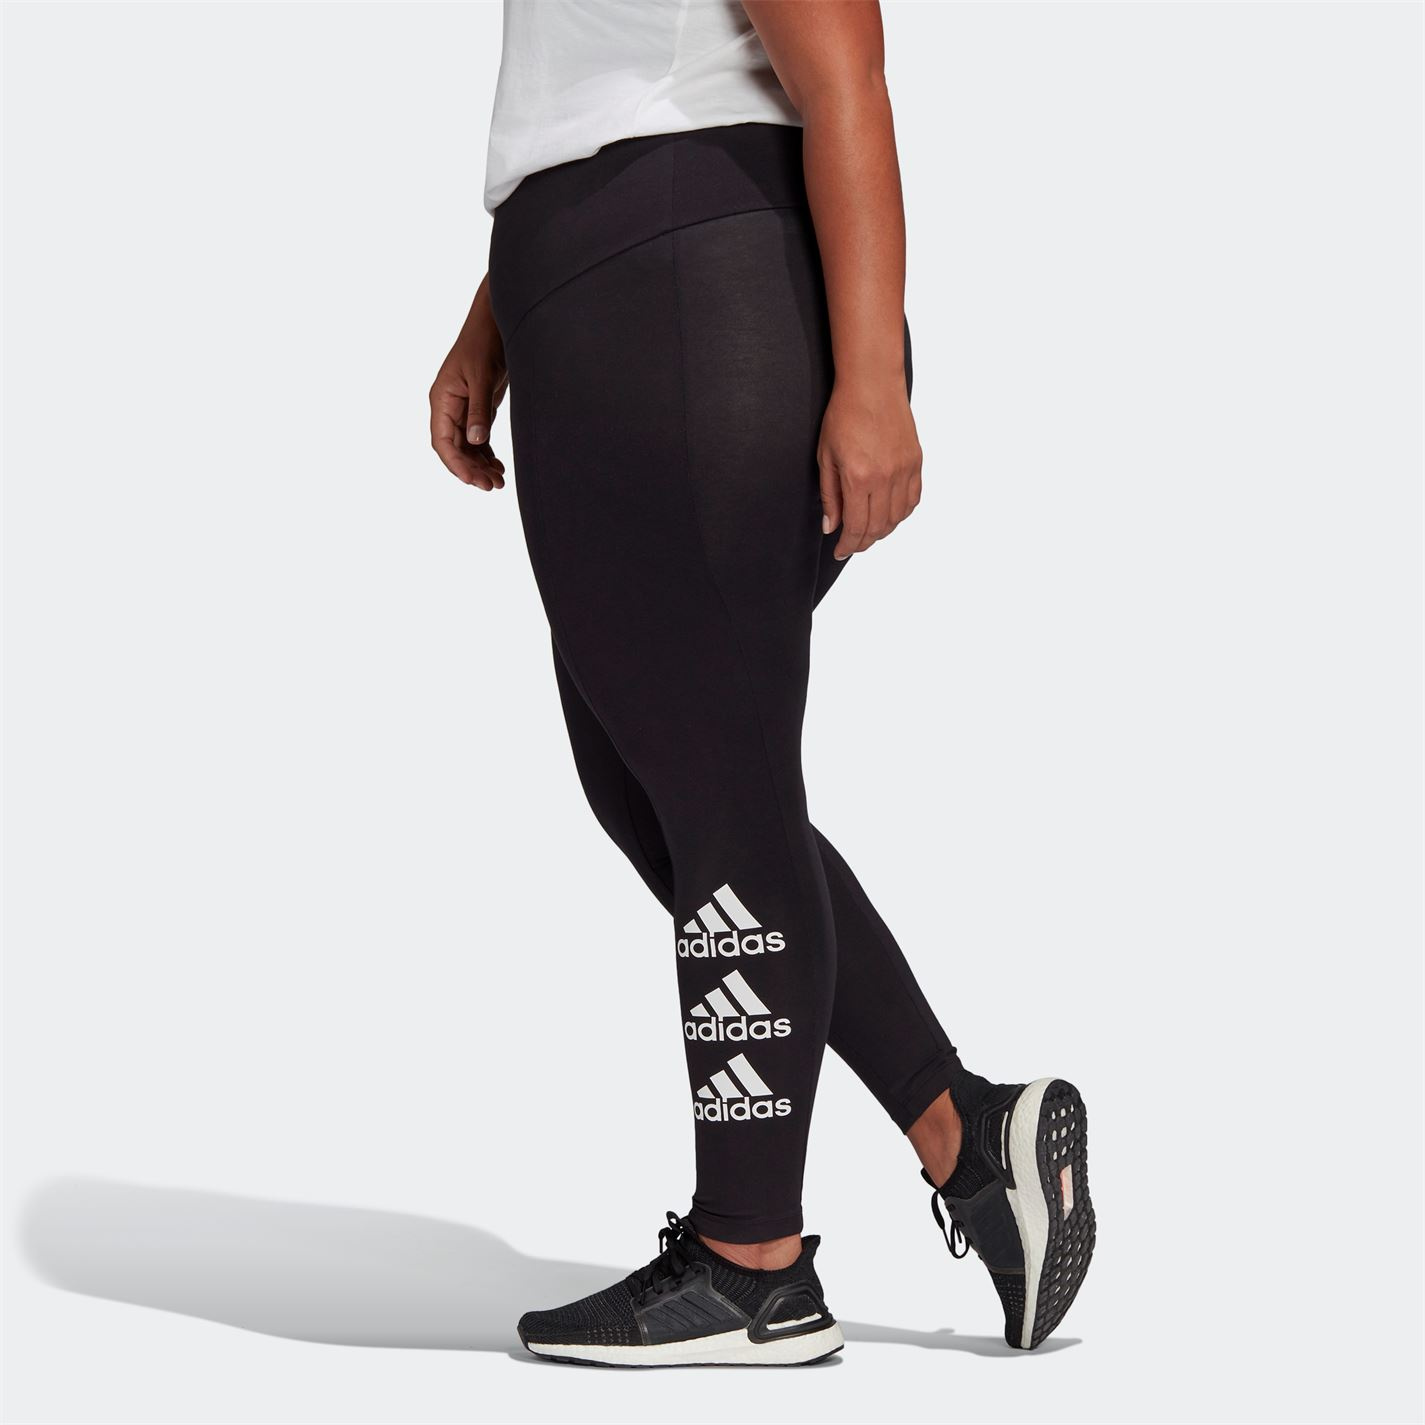 Adidas Plus Size Leggings Review